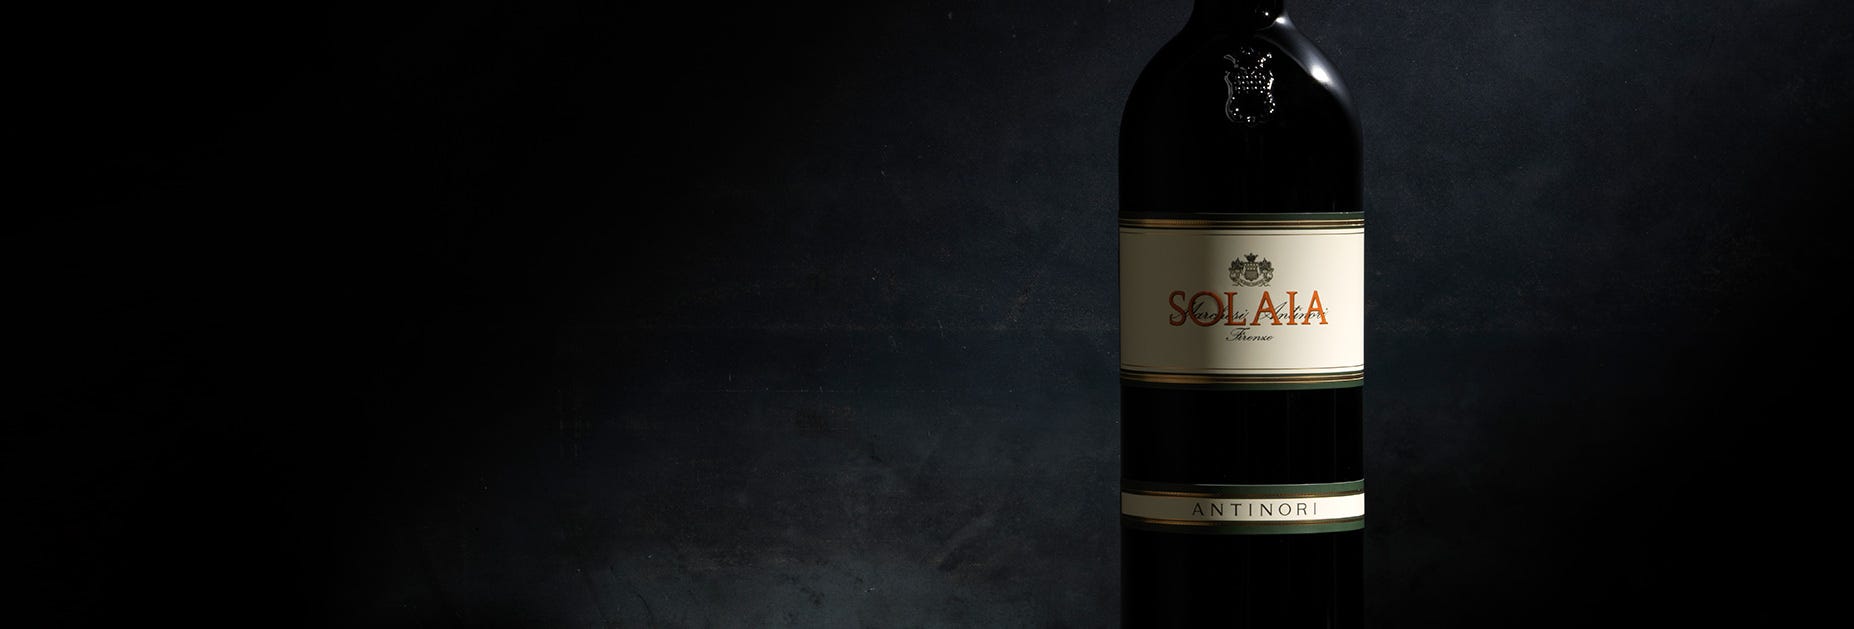 Weinflasche des Solaia